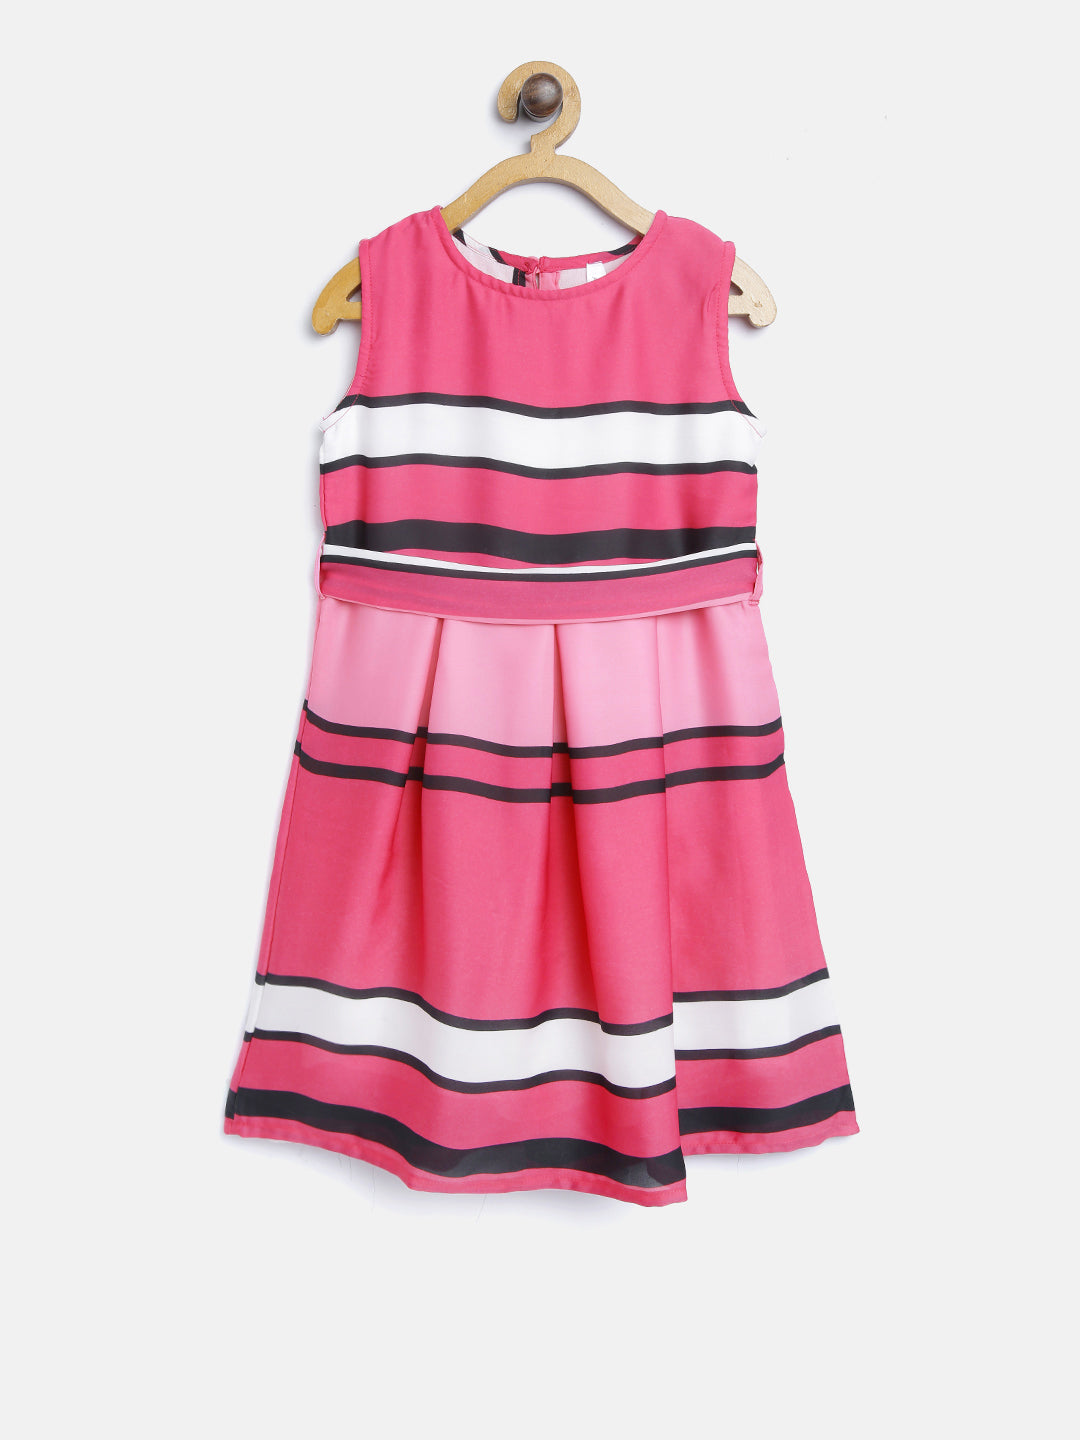 Gilr's Multitier Embellished Pink Net Party Dress - StyleStone Kid